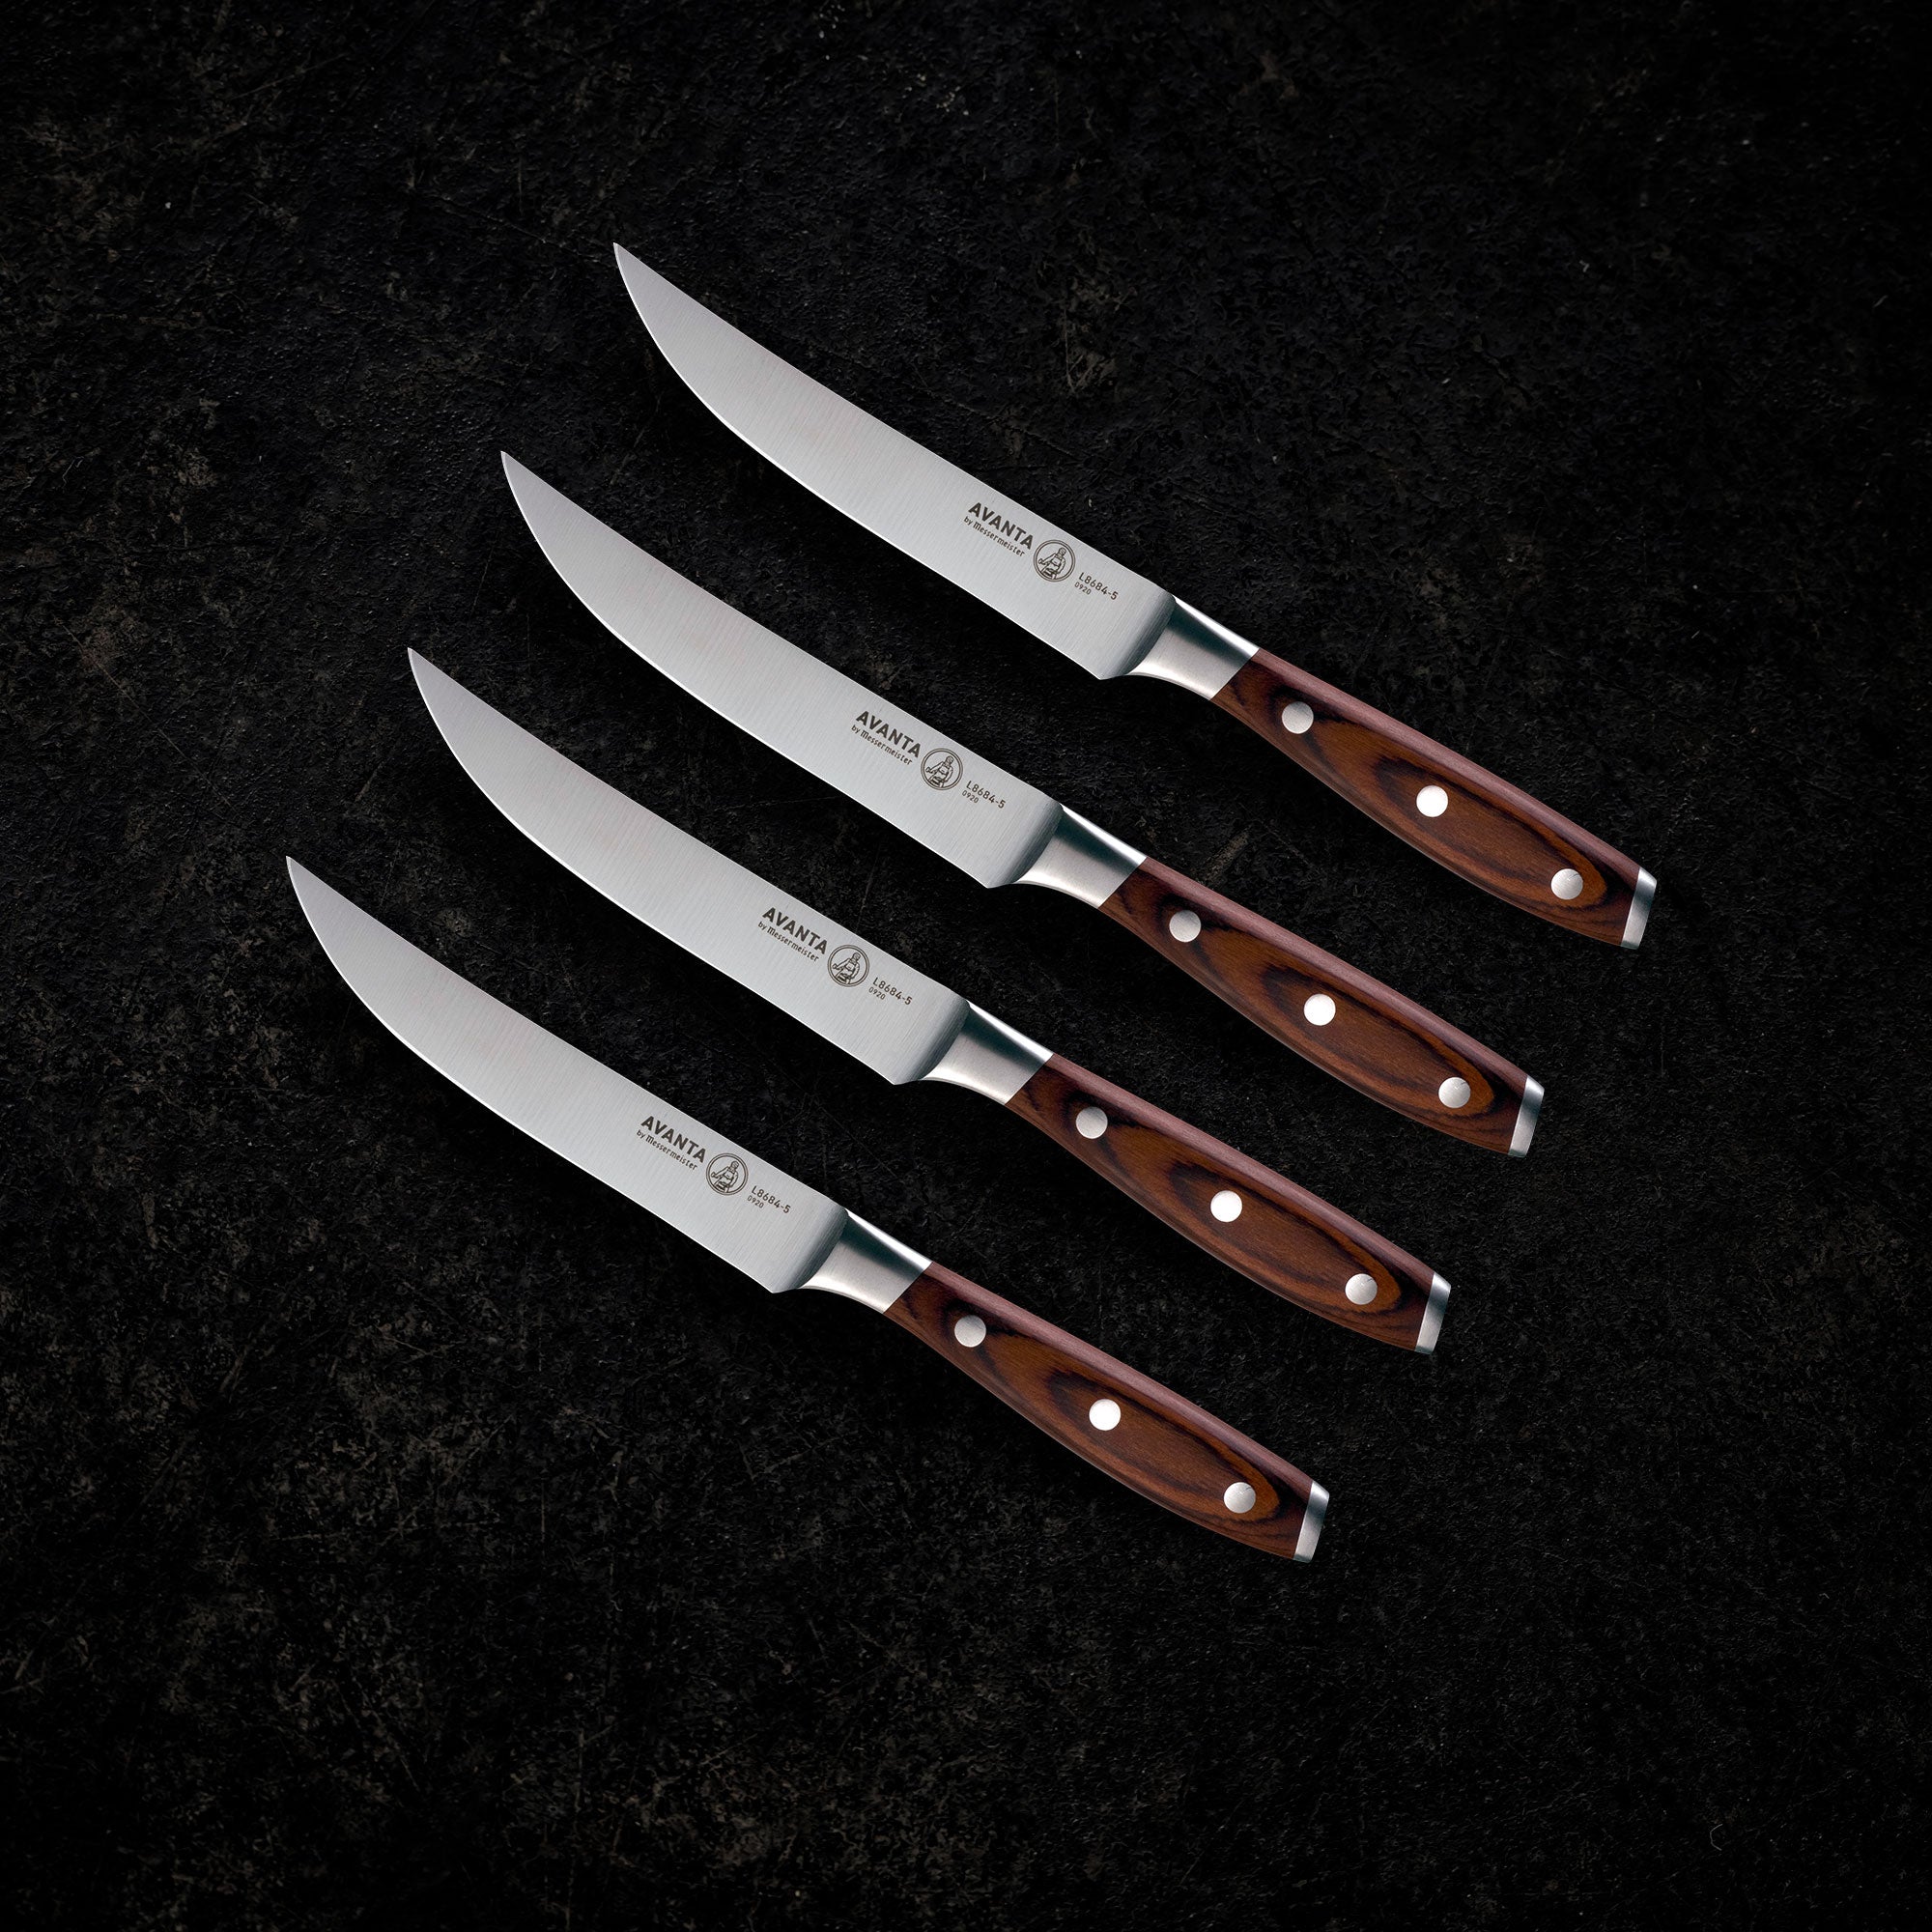 Viking Steakhouse Pakka Wood Steak Knife 6 Piece Set, Red